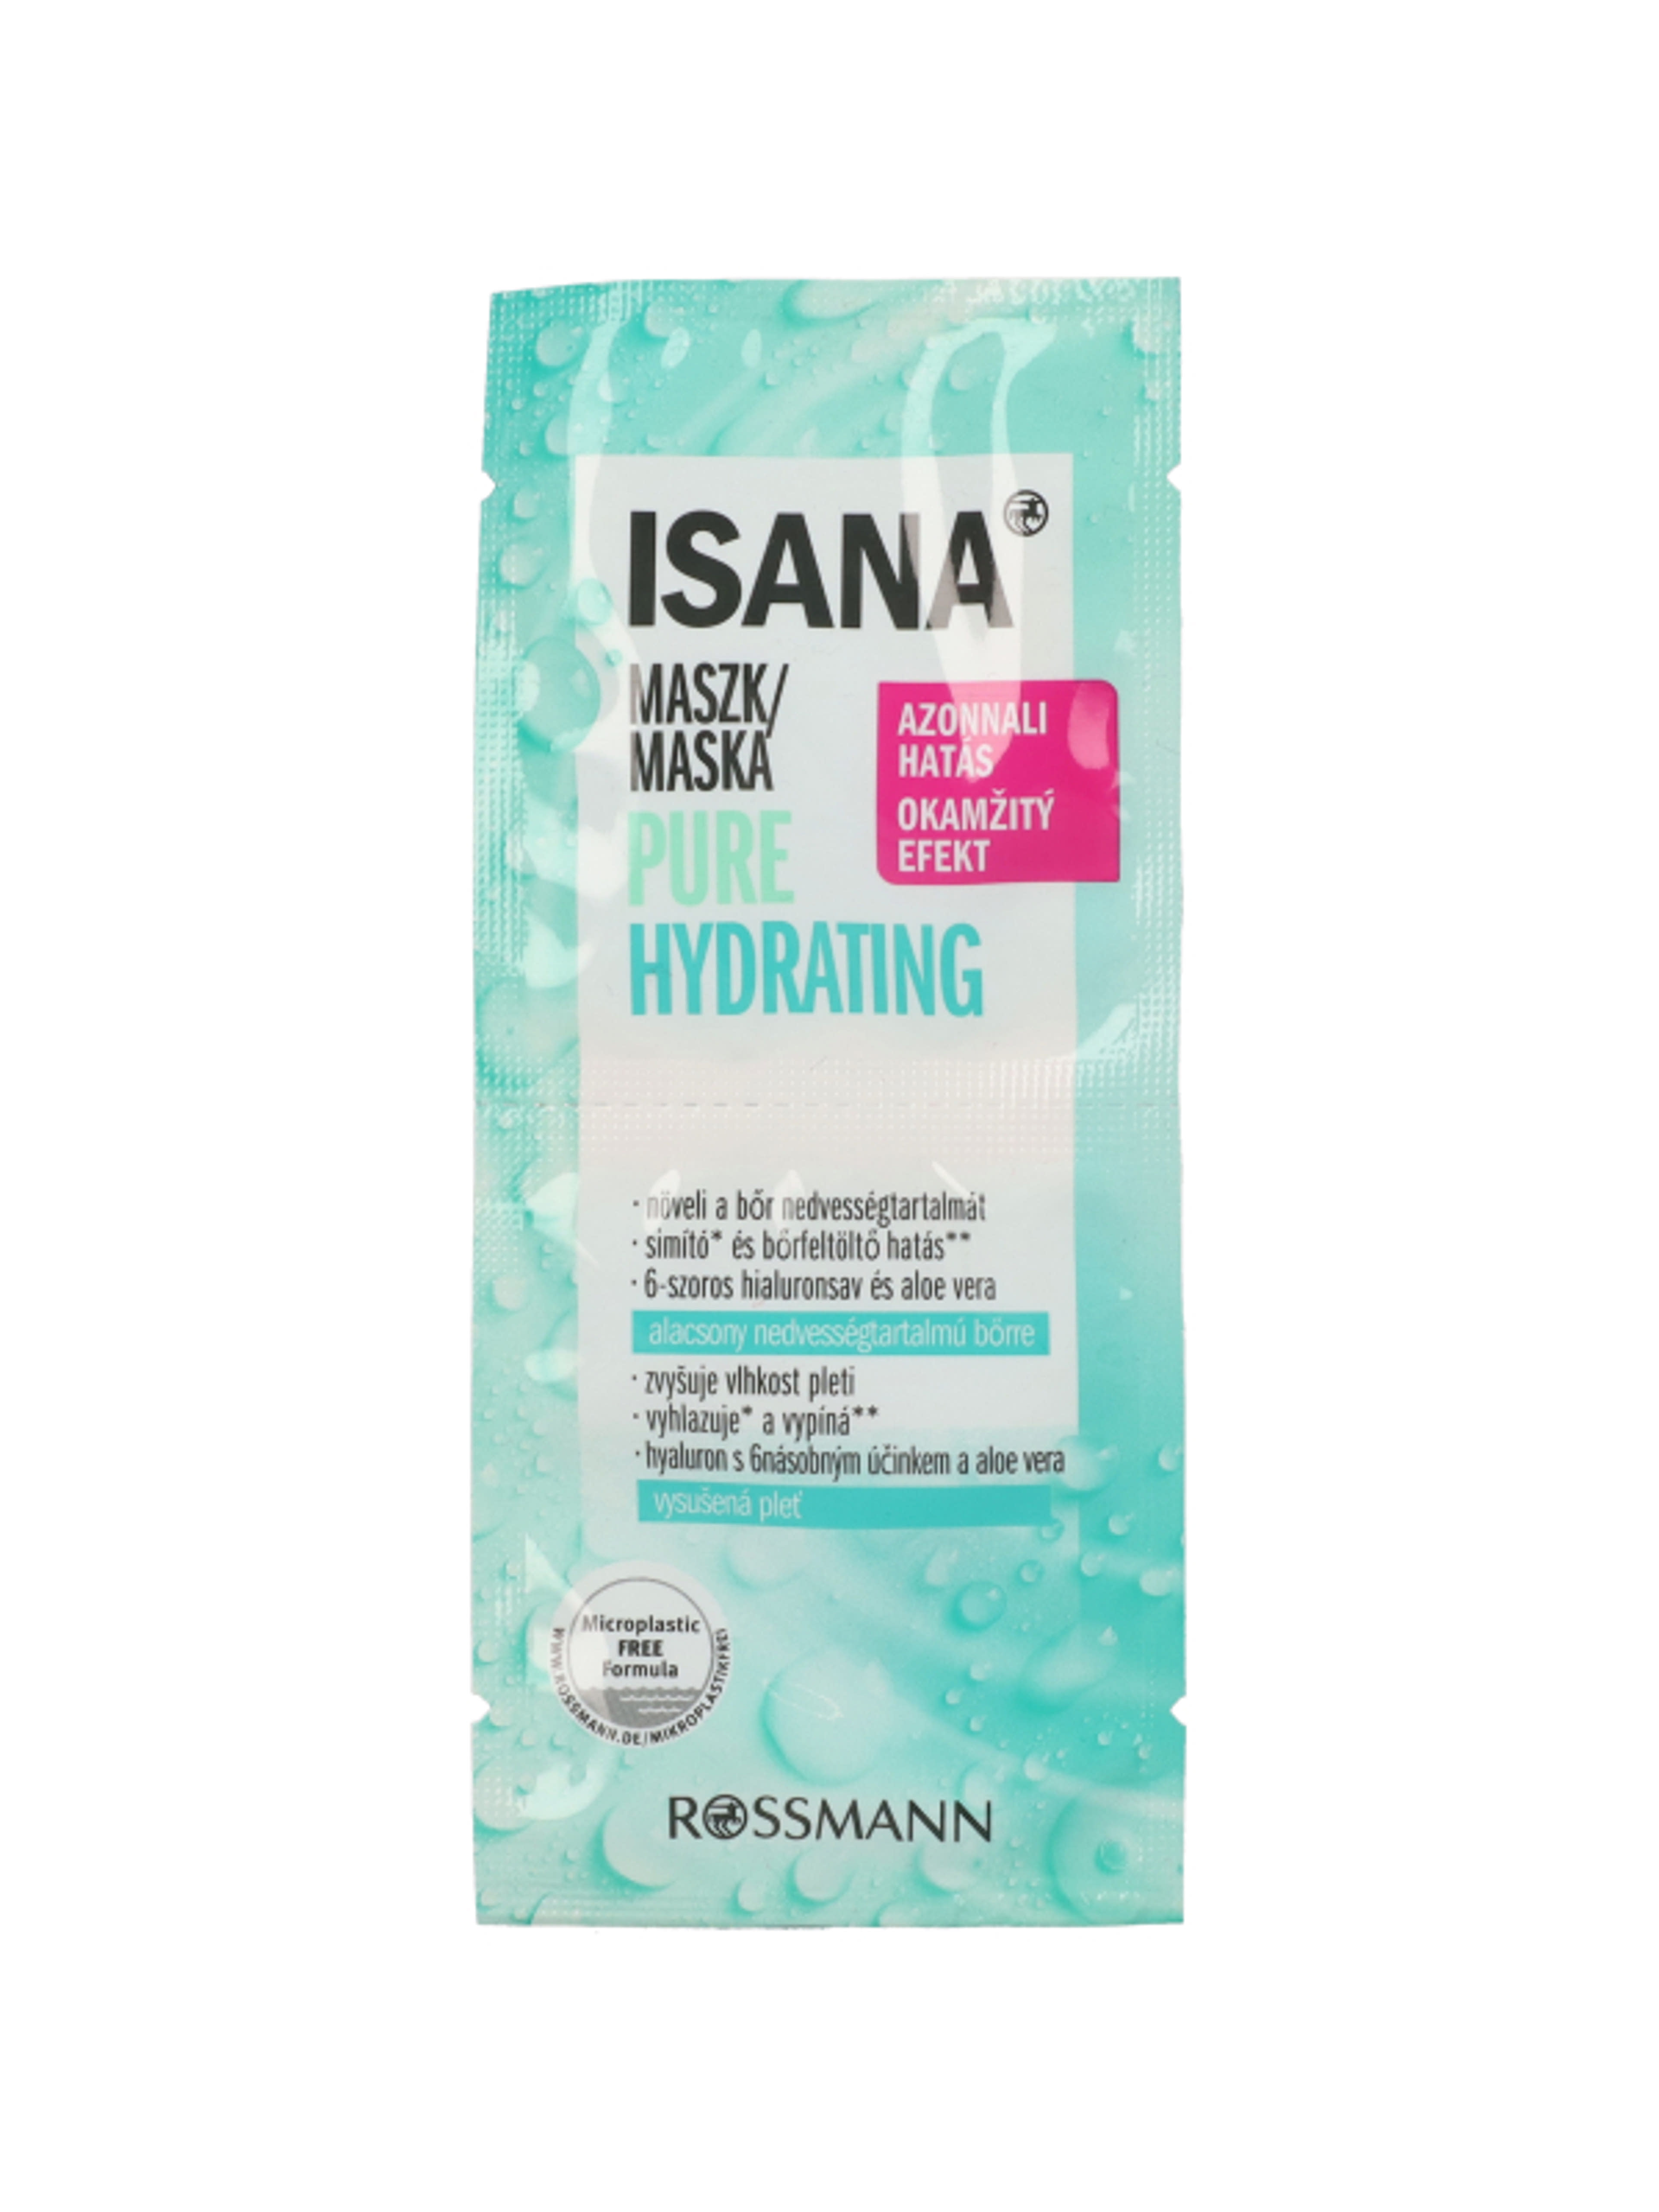 Isana Pure Hydrating maszk 2x8 ml - 16 ml